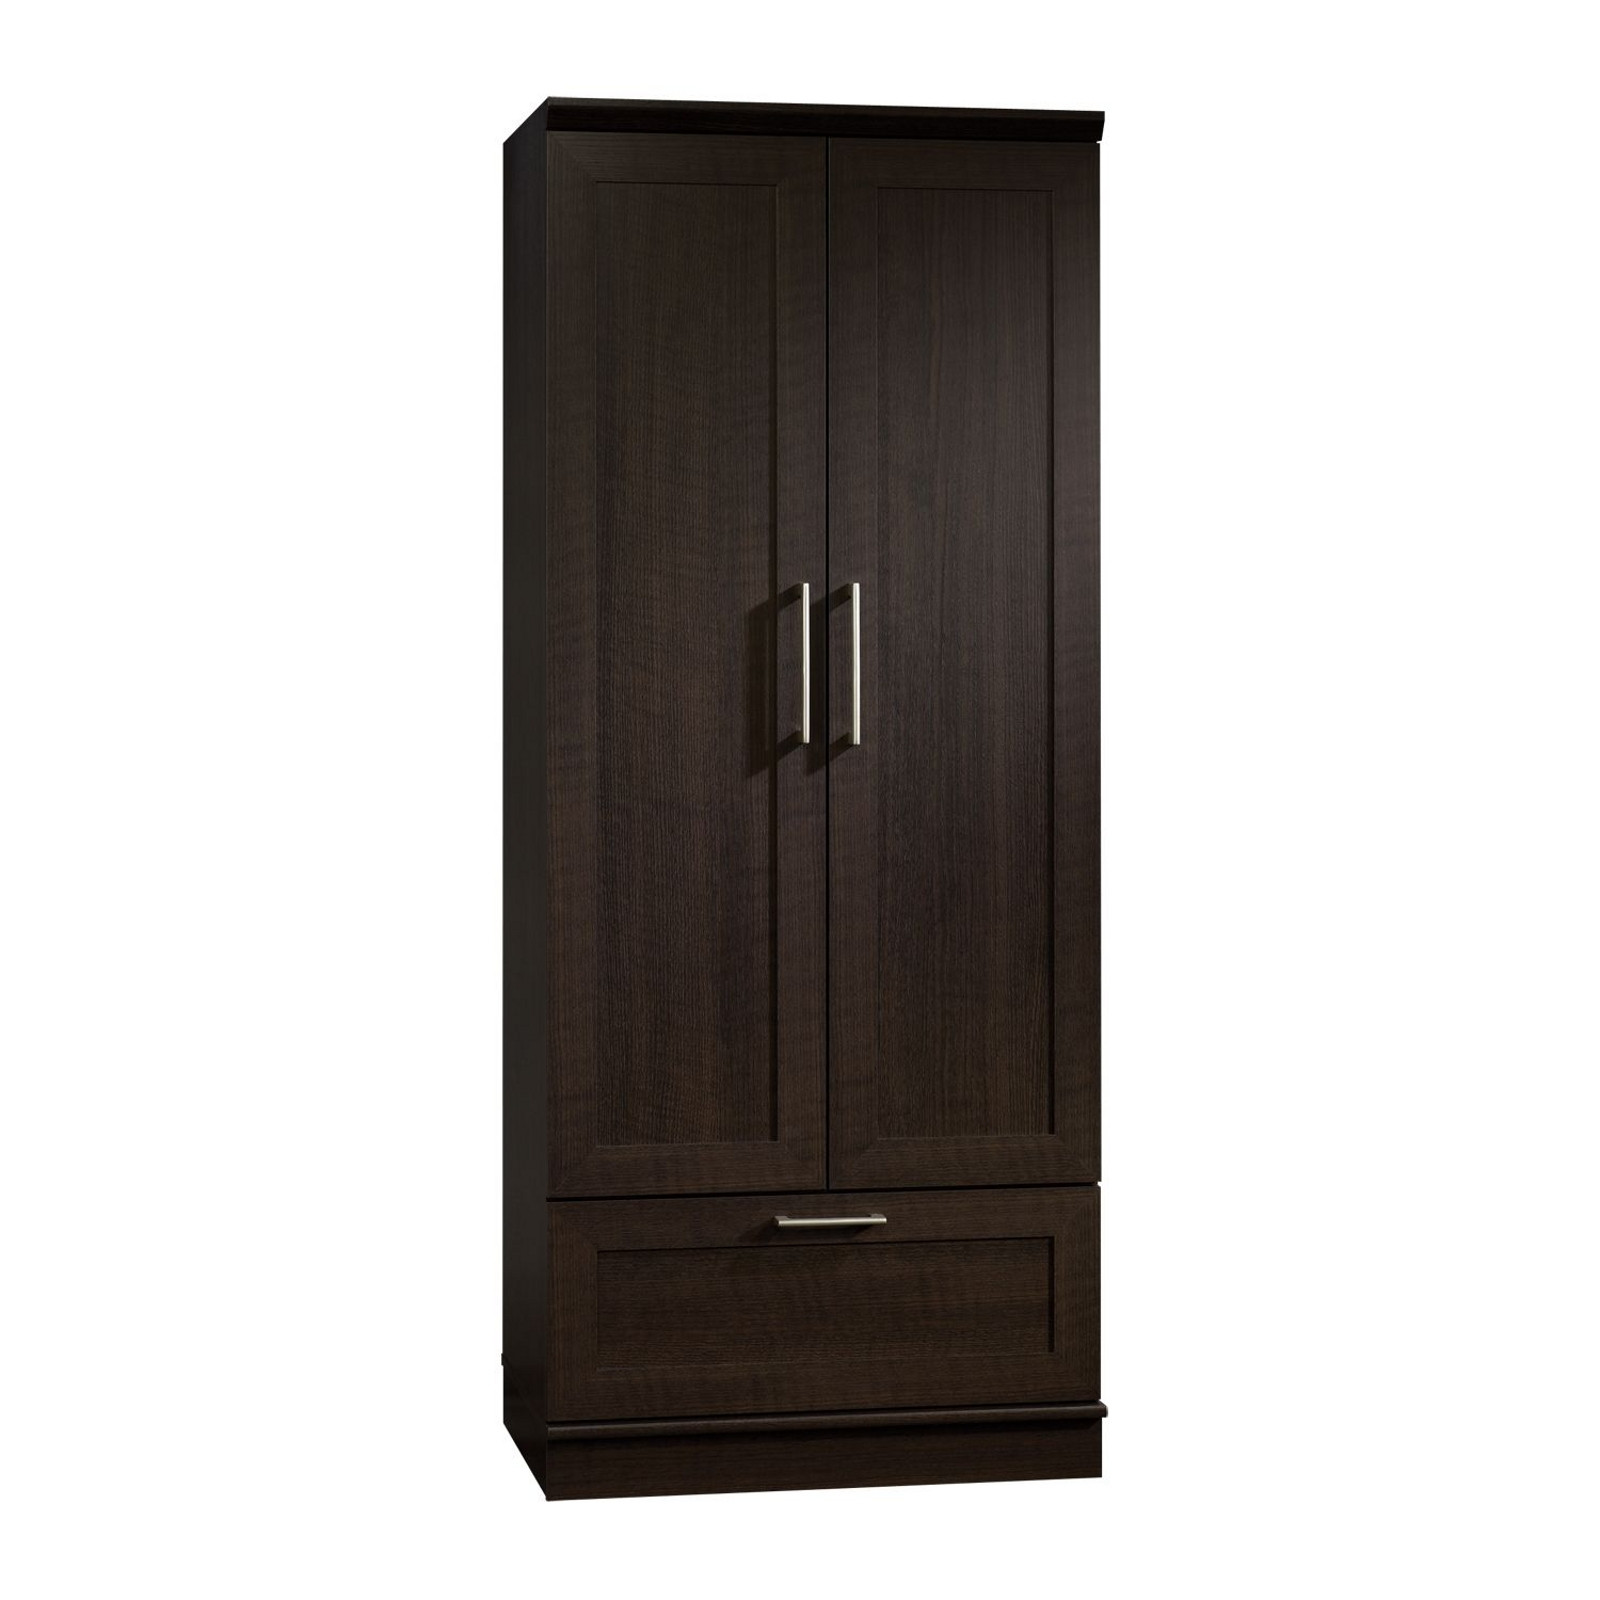 Best ideas about Closet Storage Cabinets
. Save or Pin Sauder Home Plus Wardrobe Storage Cabinet Now.